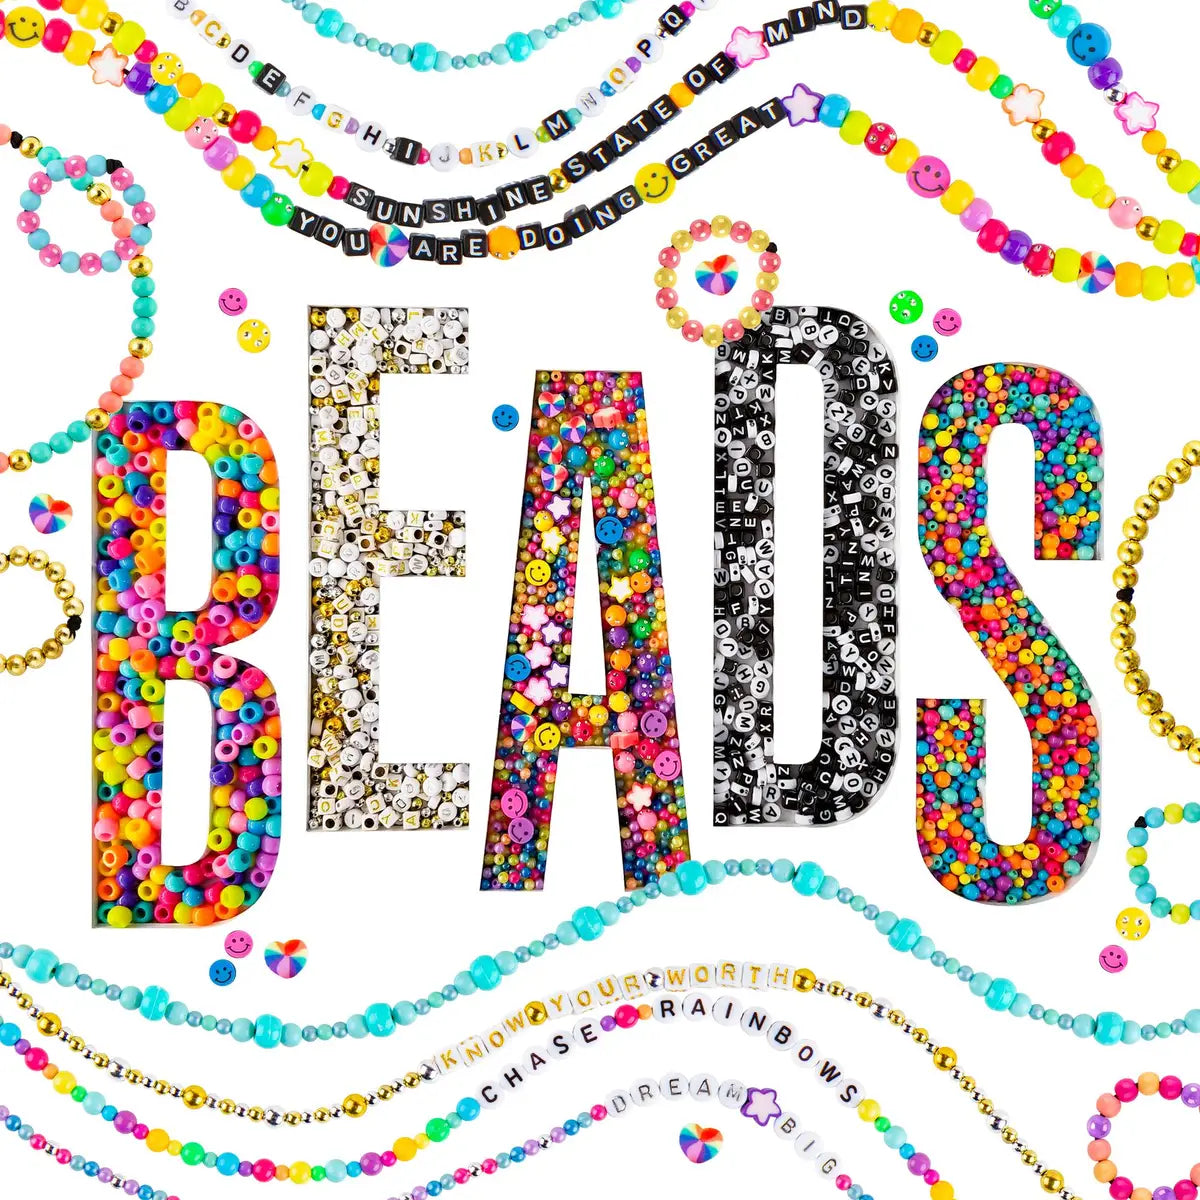 B*E*A*D*S 2000+ Beads Super Set